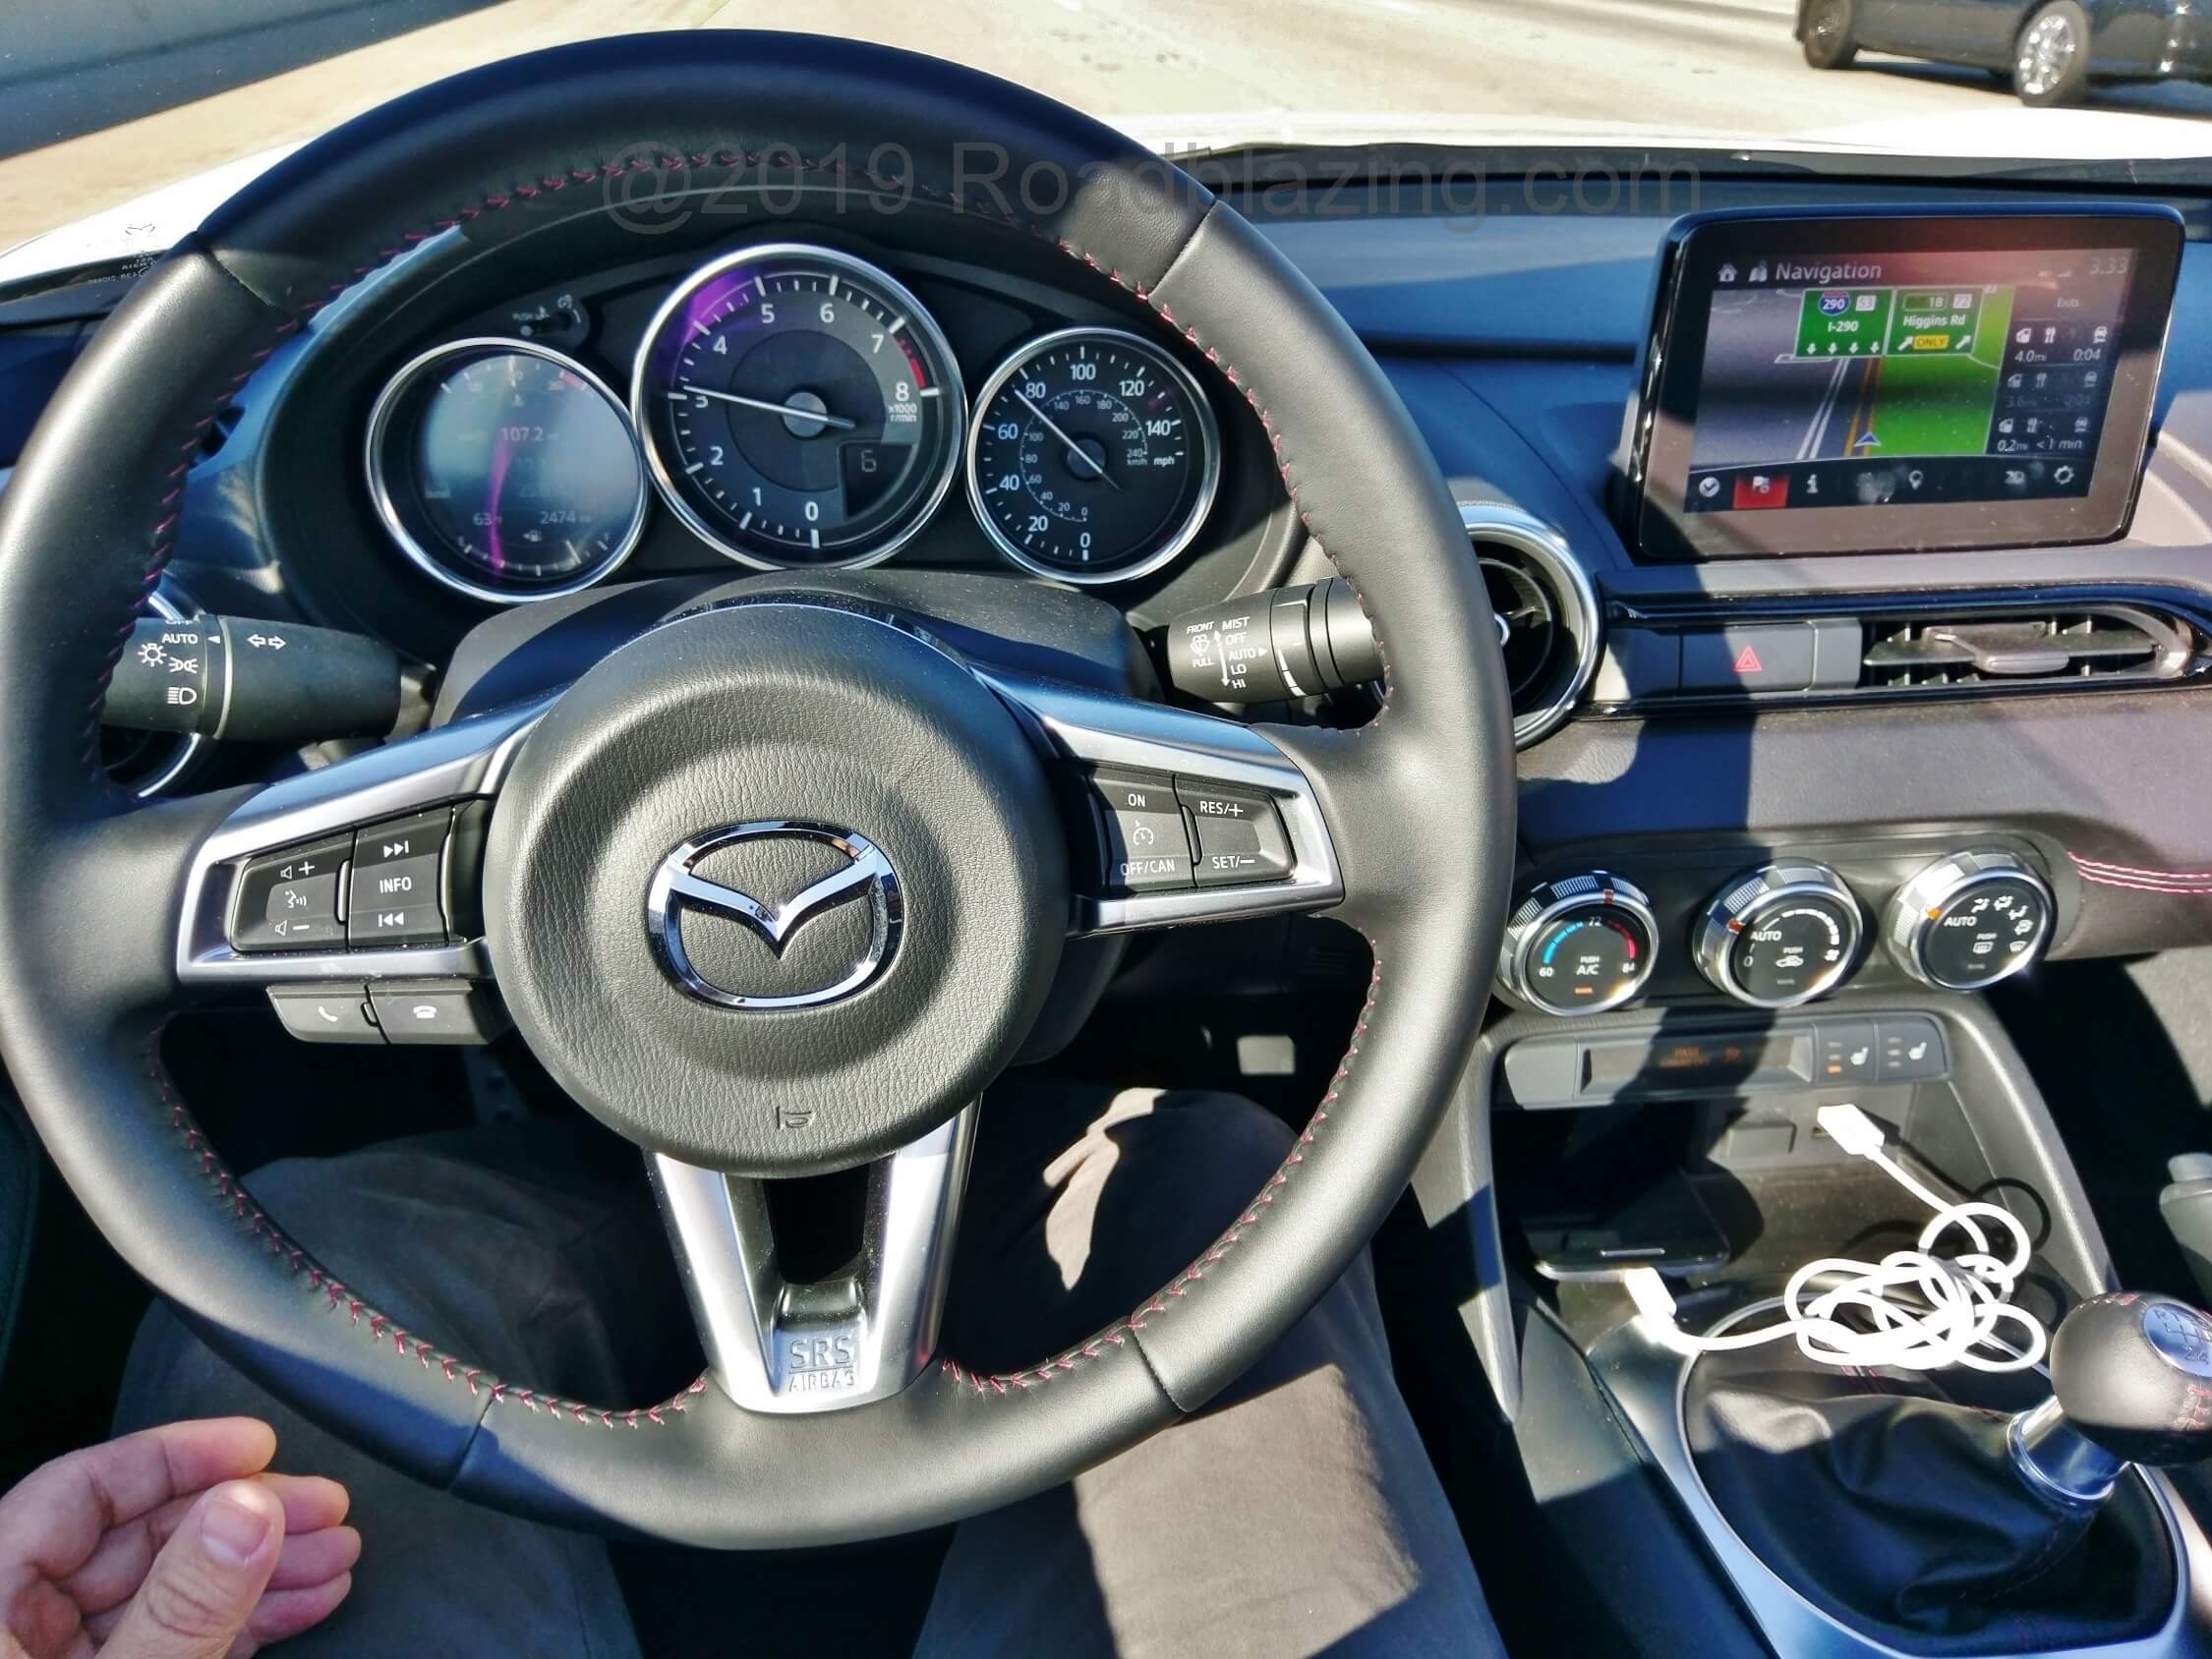 2019 Mazda MX-5 Grand Touring: Cockpit instrumentation while driving